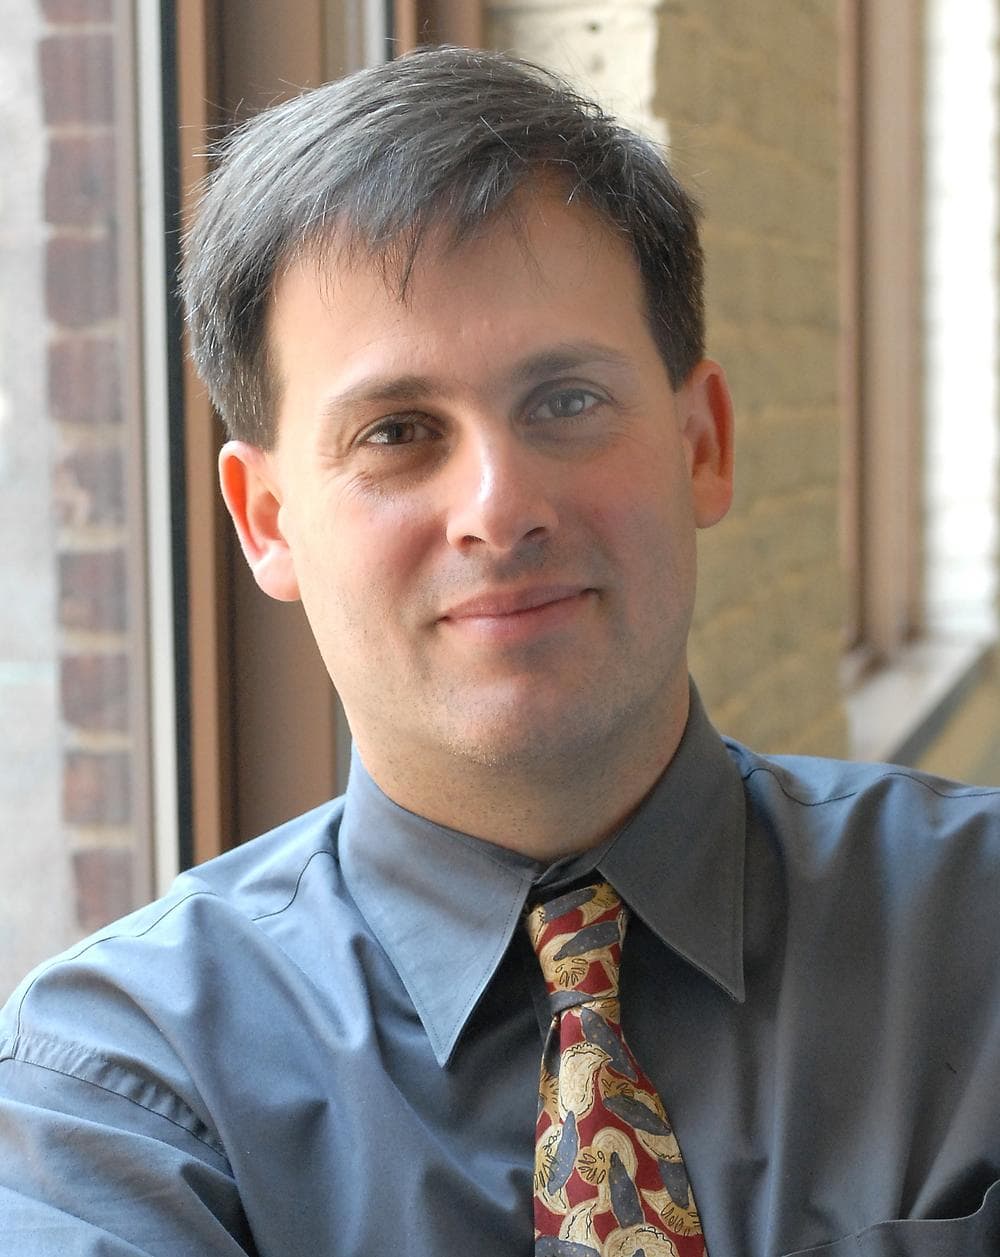 Lead author Michael Chernew, professor, Harvard Medical School (photo/Josh Touster)